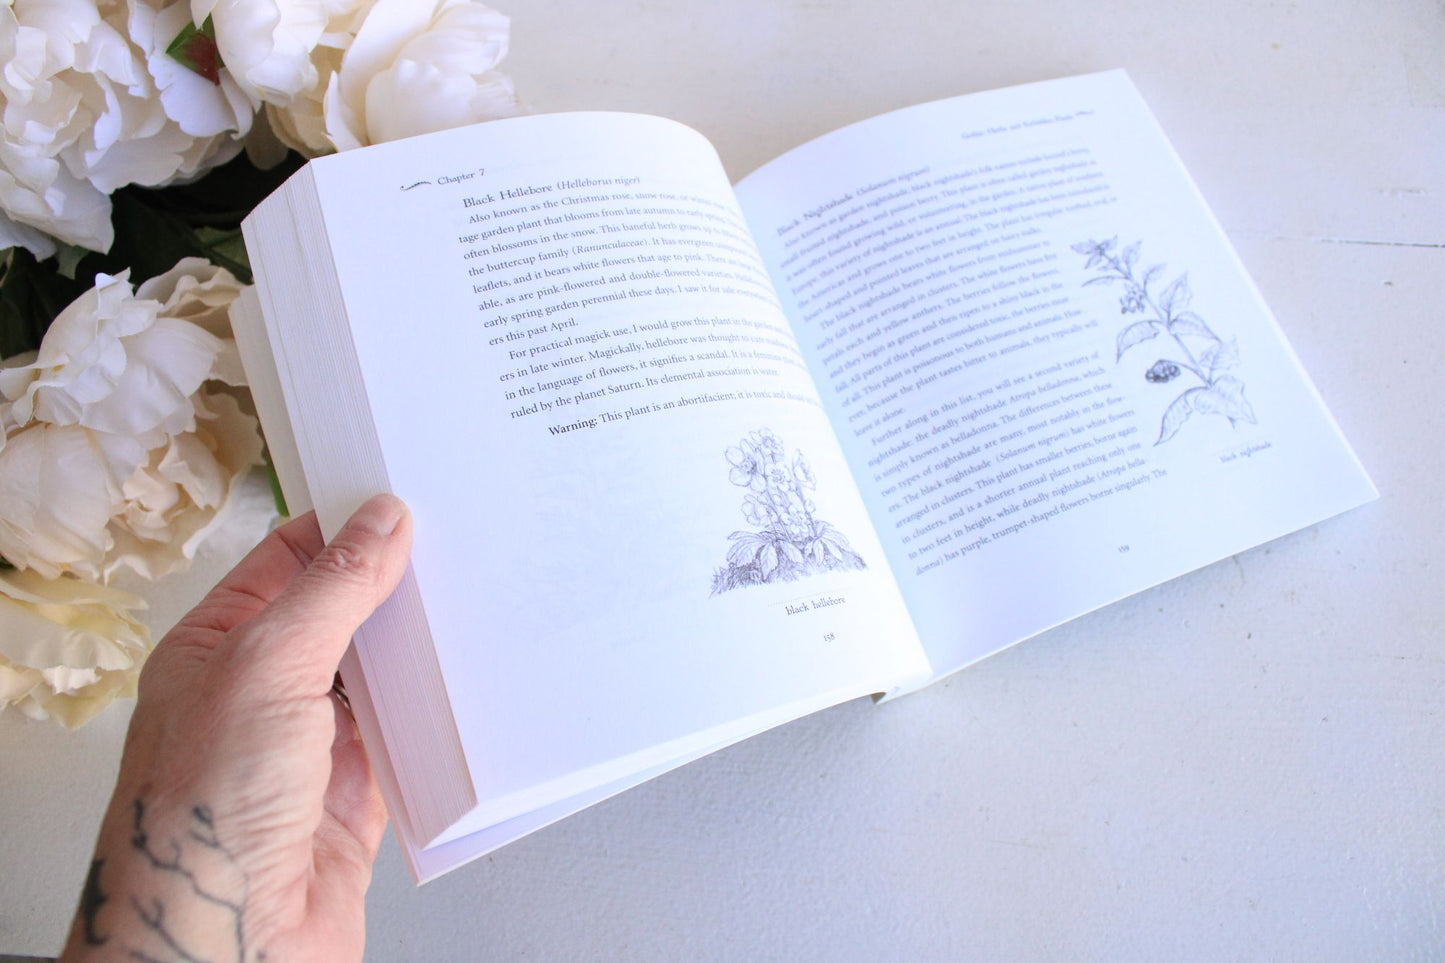 Book, "A Garden Witch's Herbal" by Ellen Dugan, Llewellyn Publications, 2009